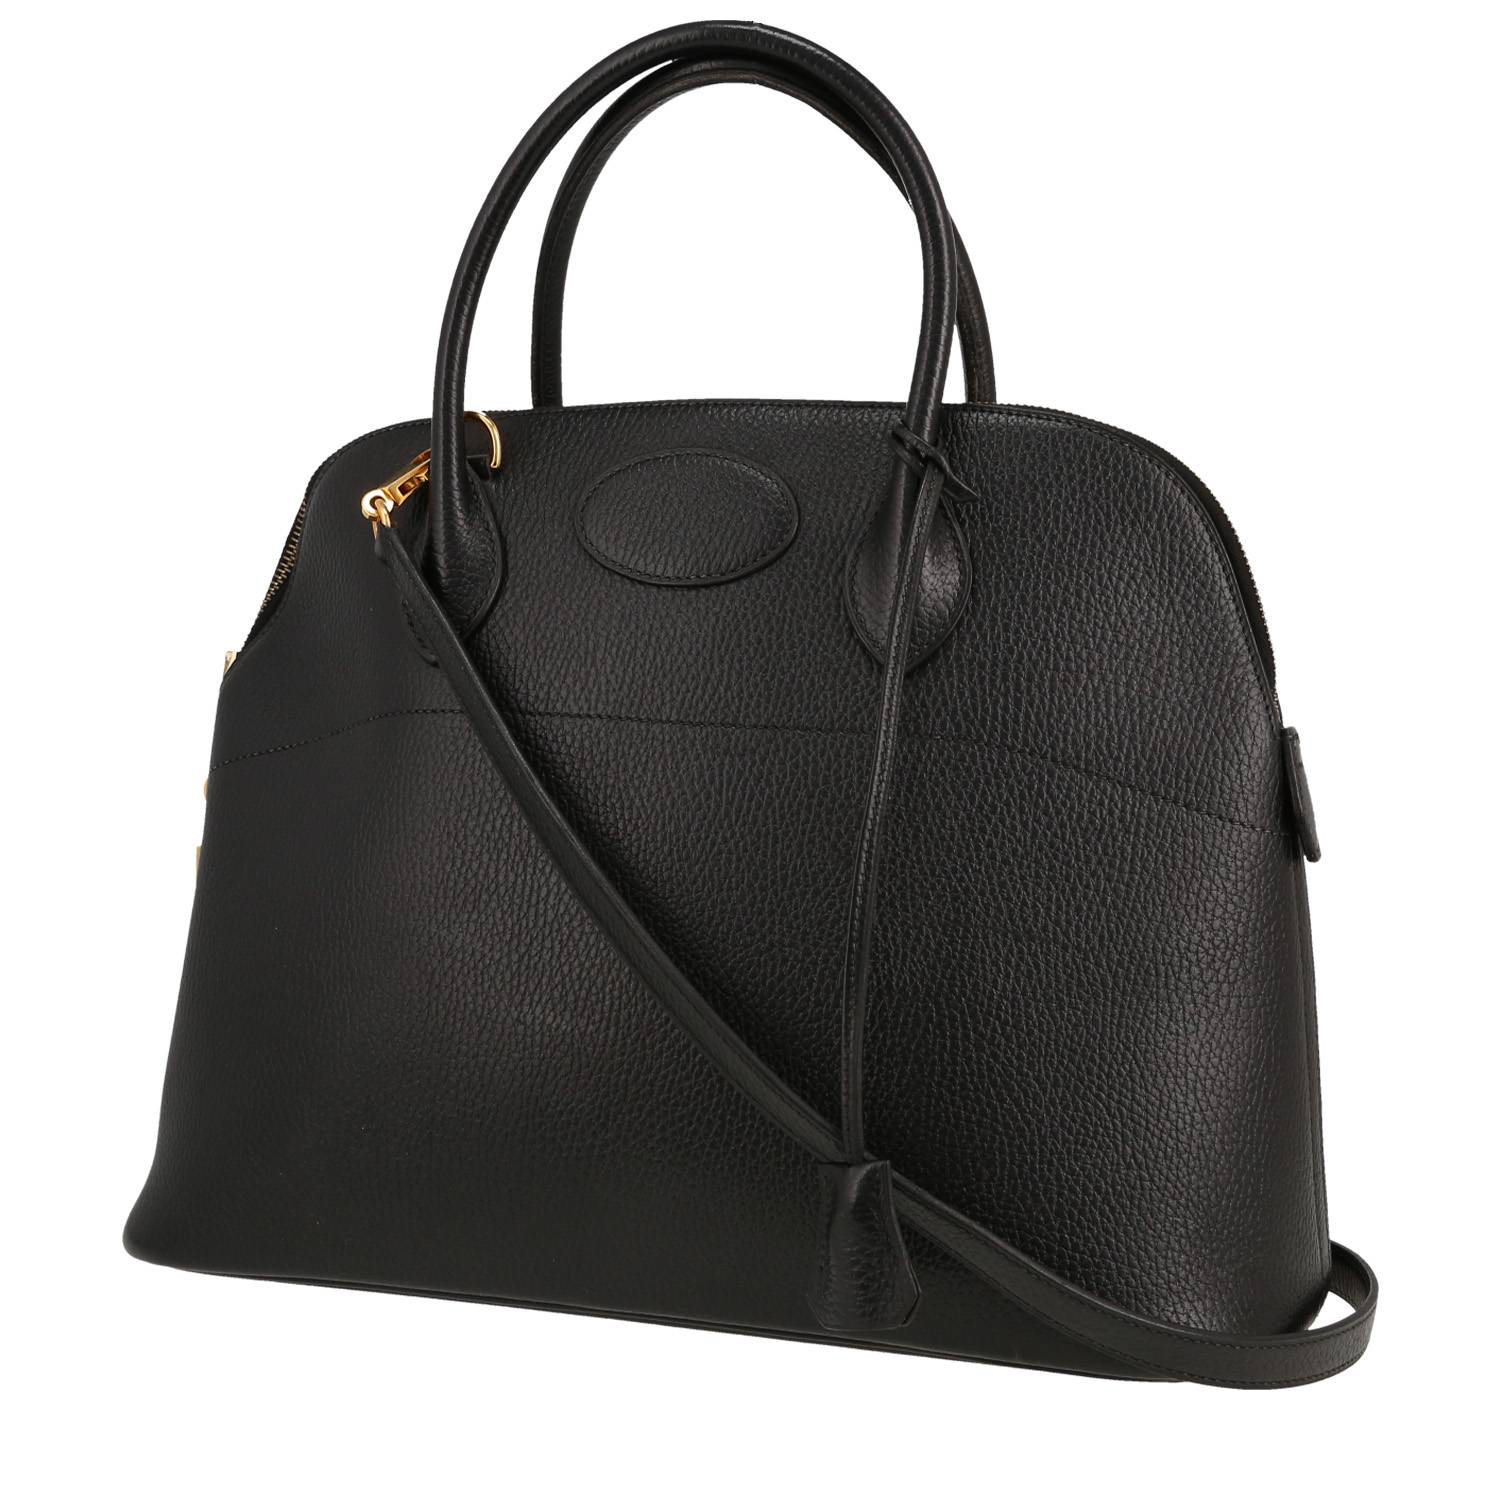 Bolide 37 cm Handbag In Black Ardenne Leather